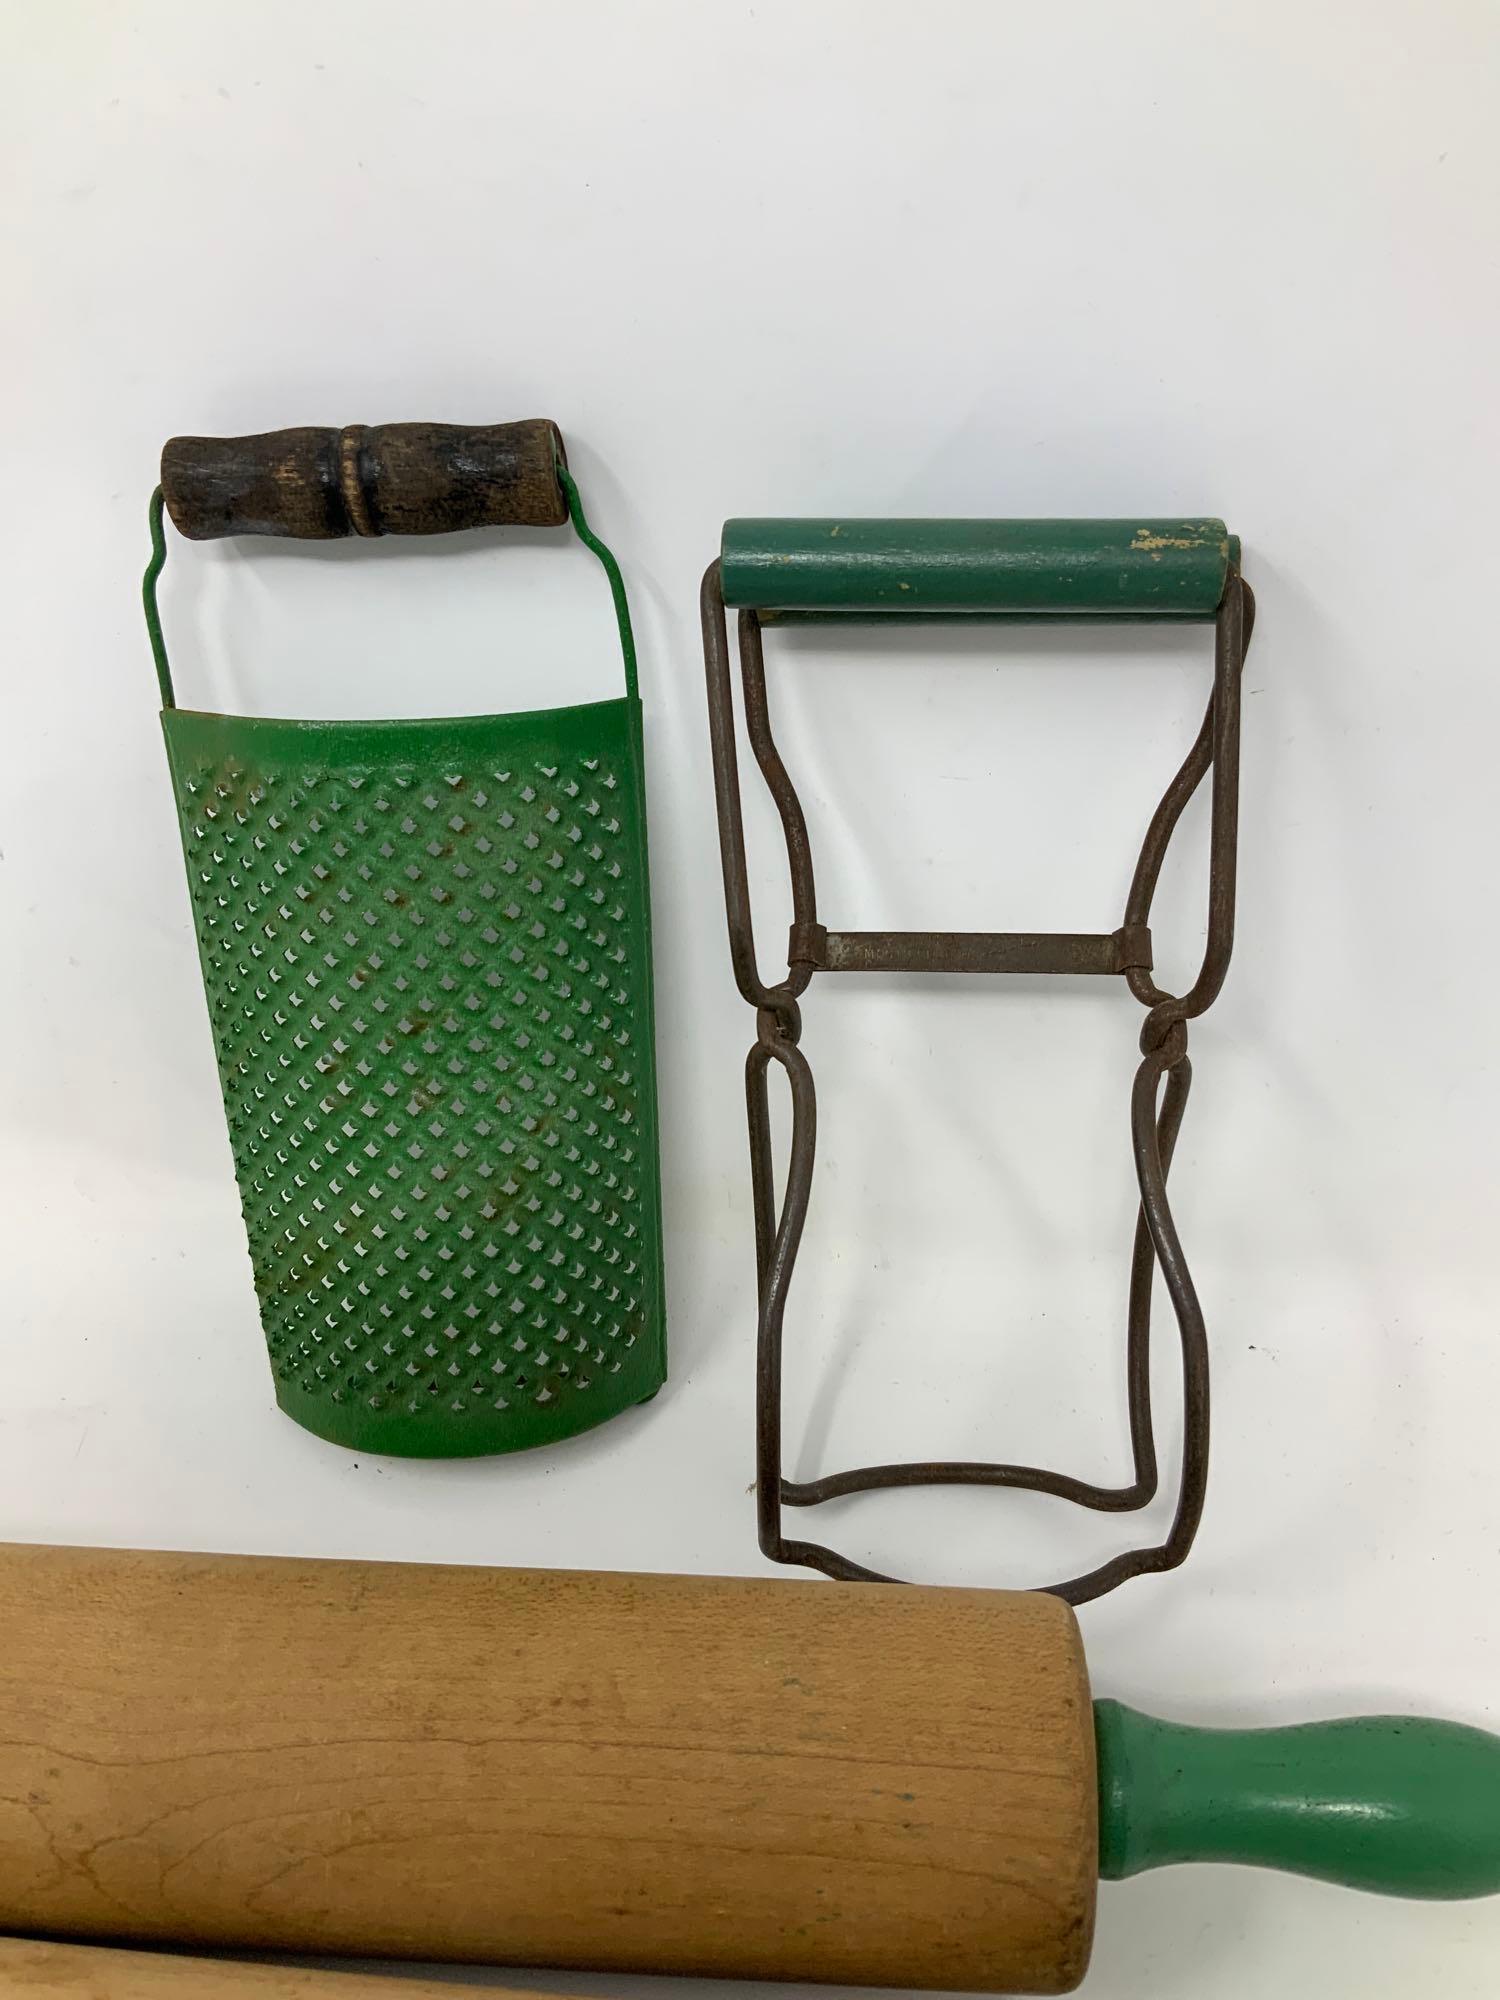 Antique green handled kitchen items